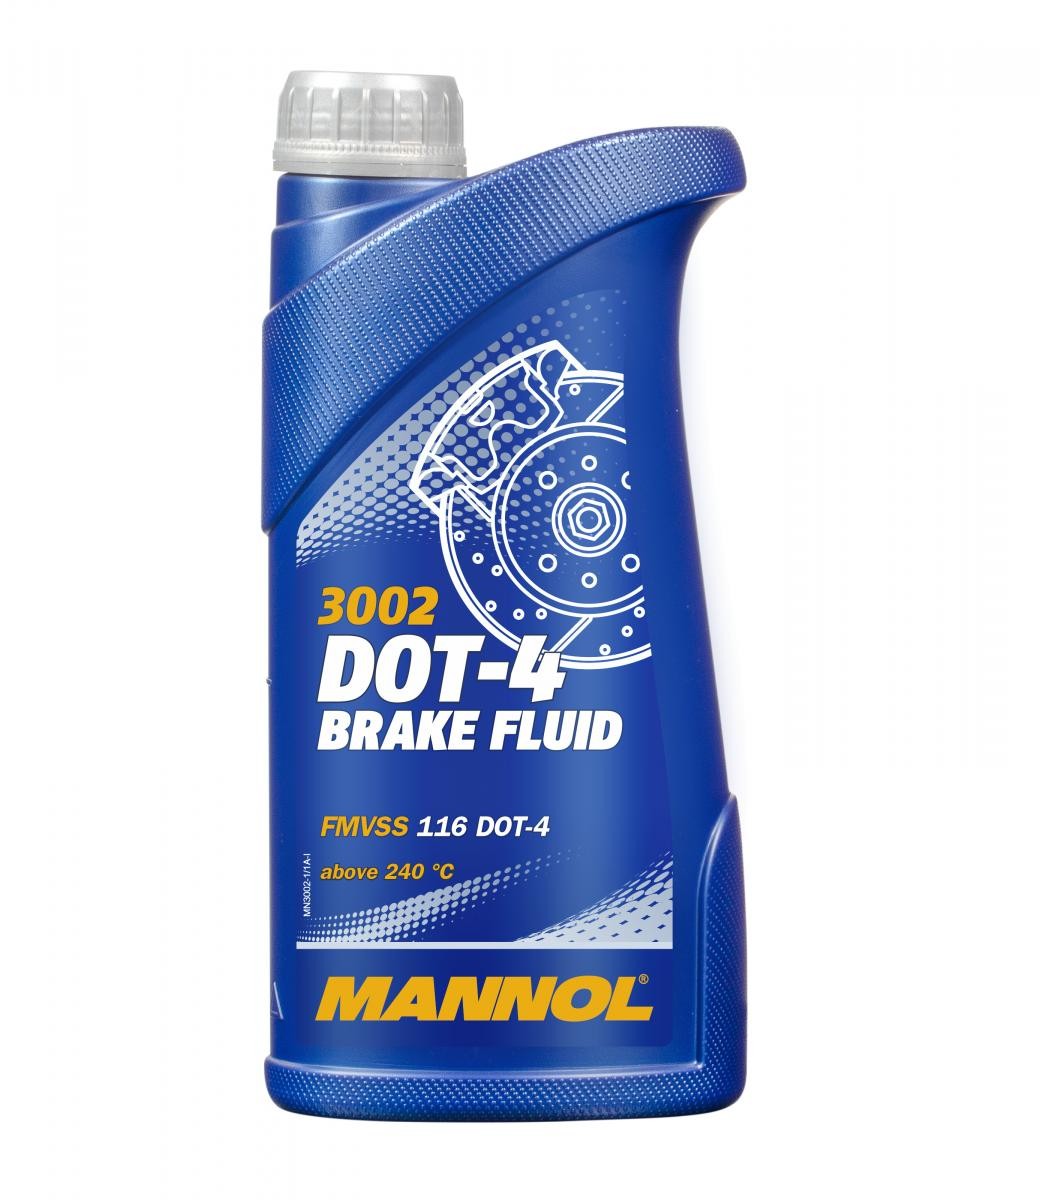 PEUGEOT KISBEE Bremsflüssigkeit 1l MANNOL DOT-4 BRAKE FLUID MN3002-1